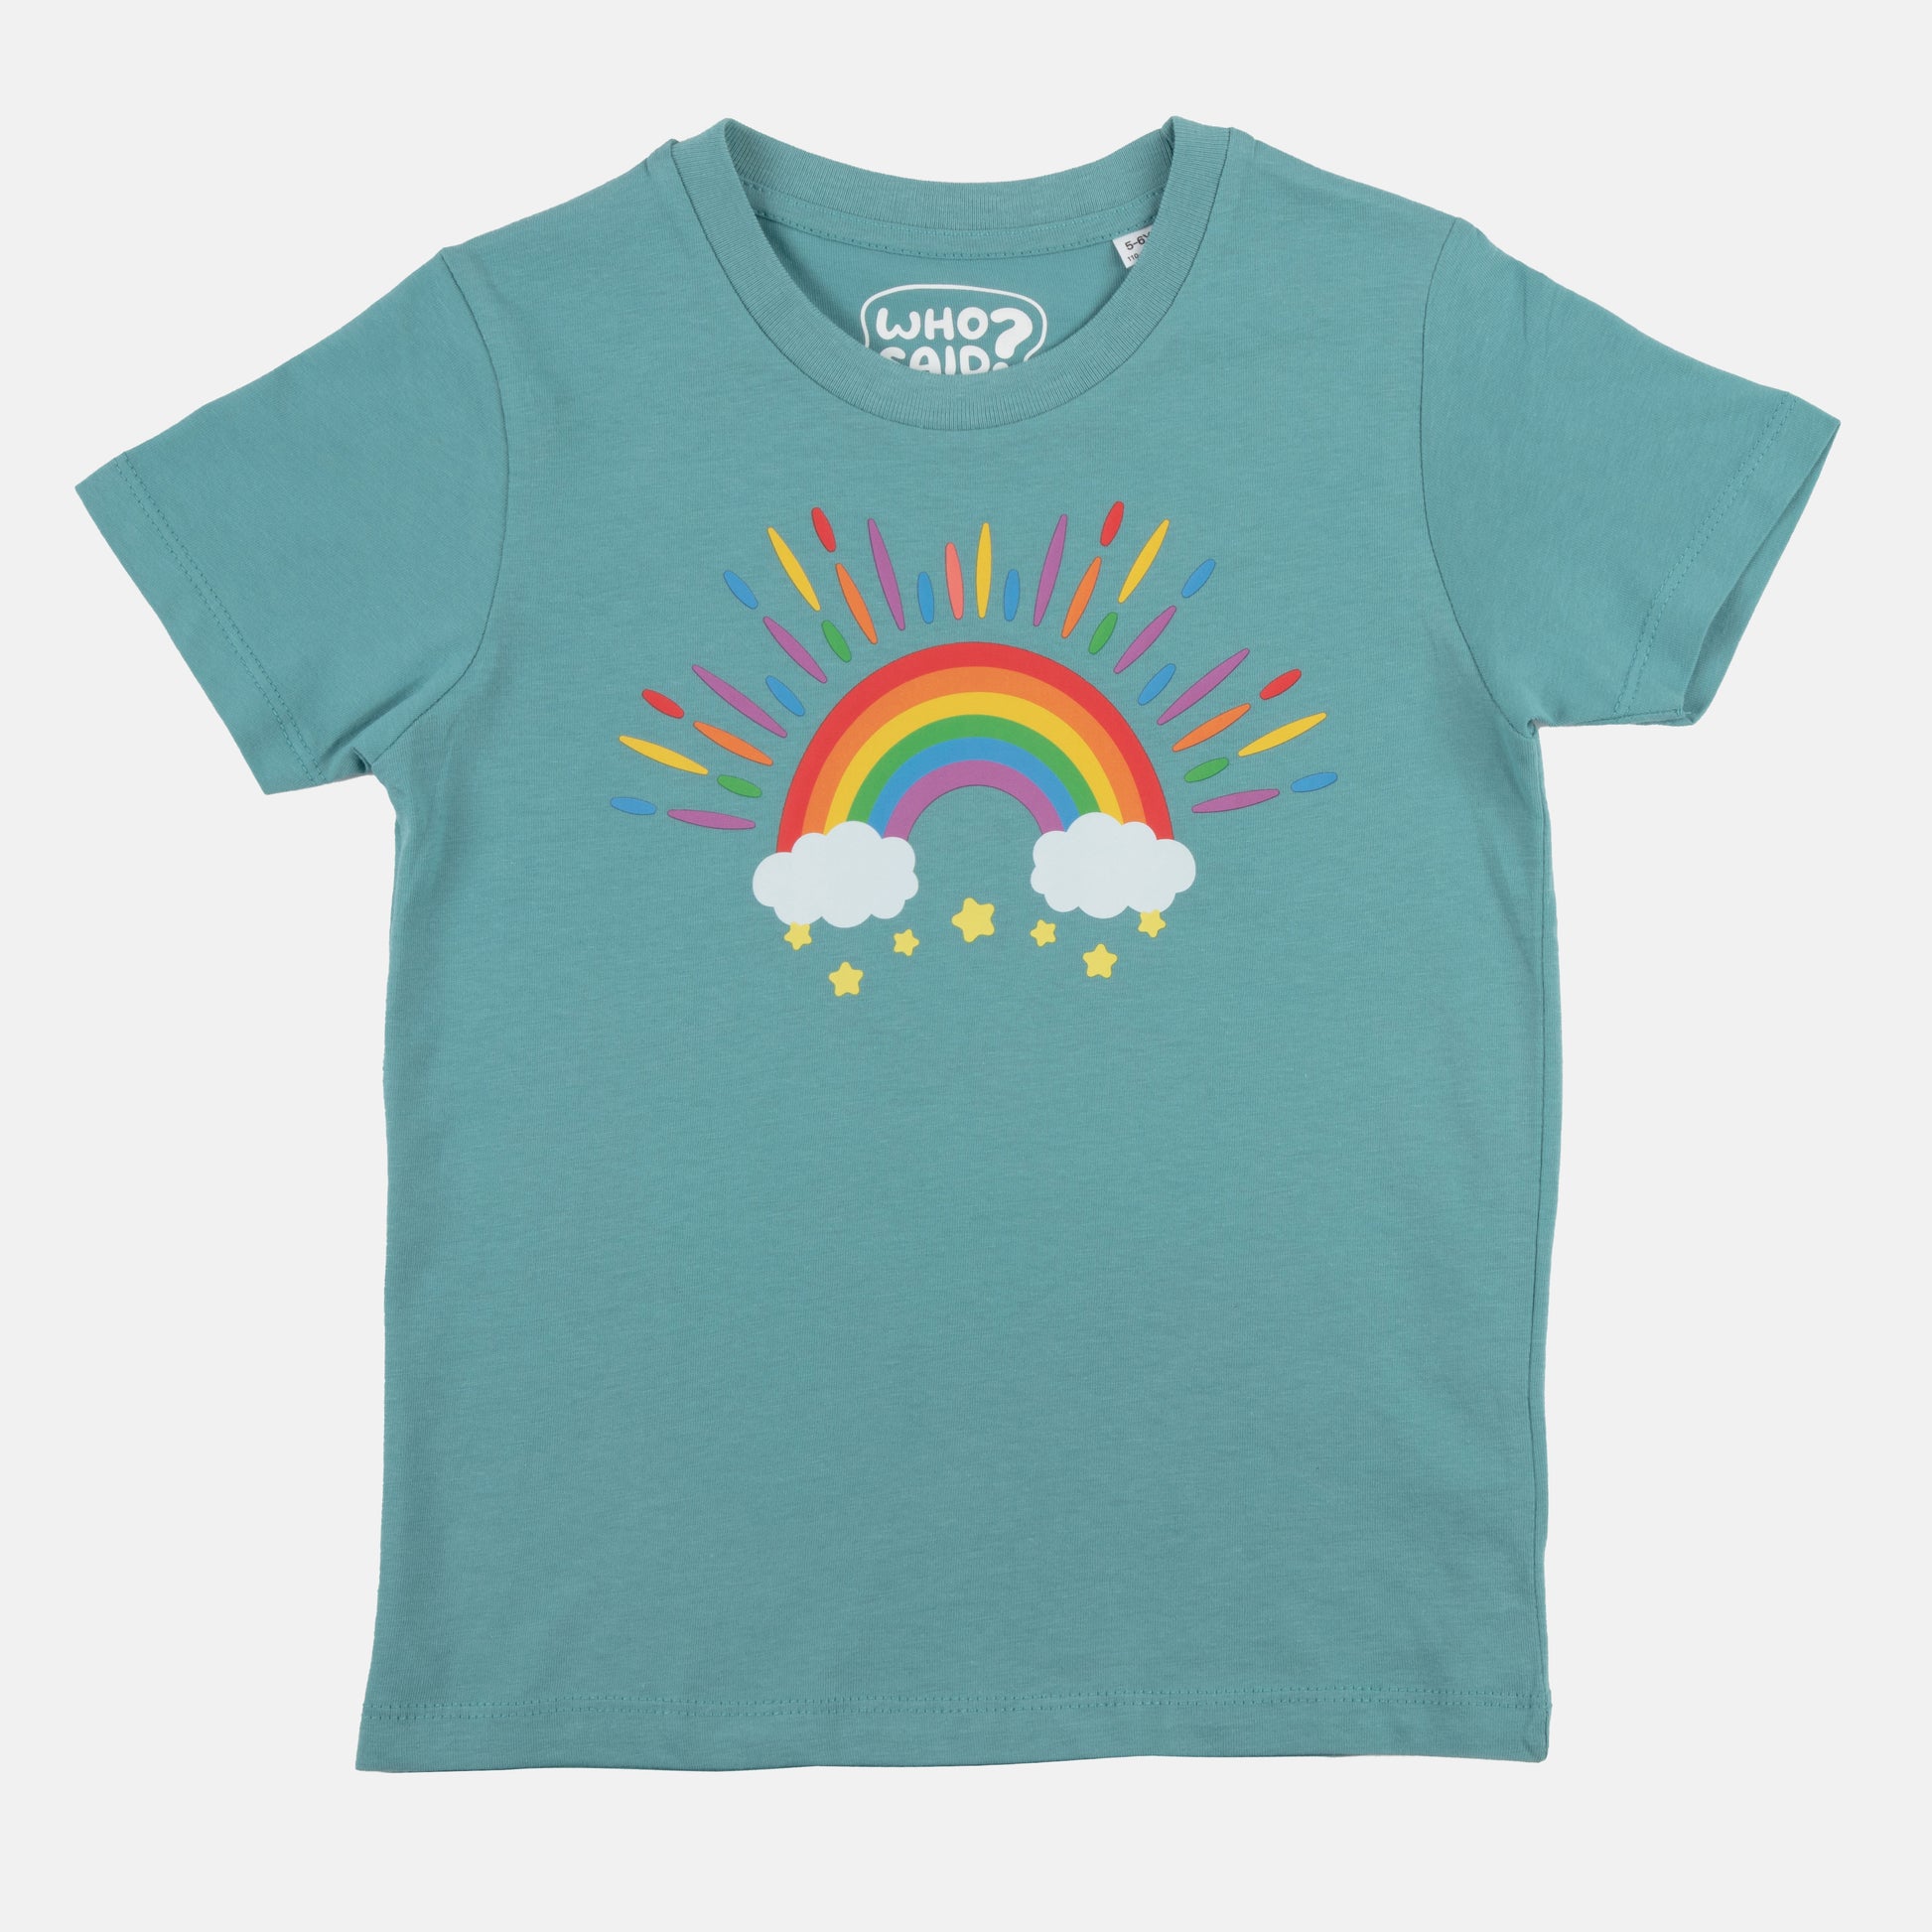 Lieblingsfarbe Bunt! | Shirt | said Who